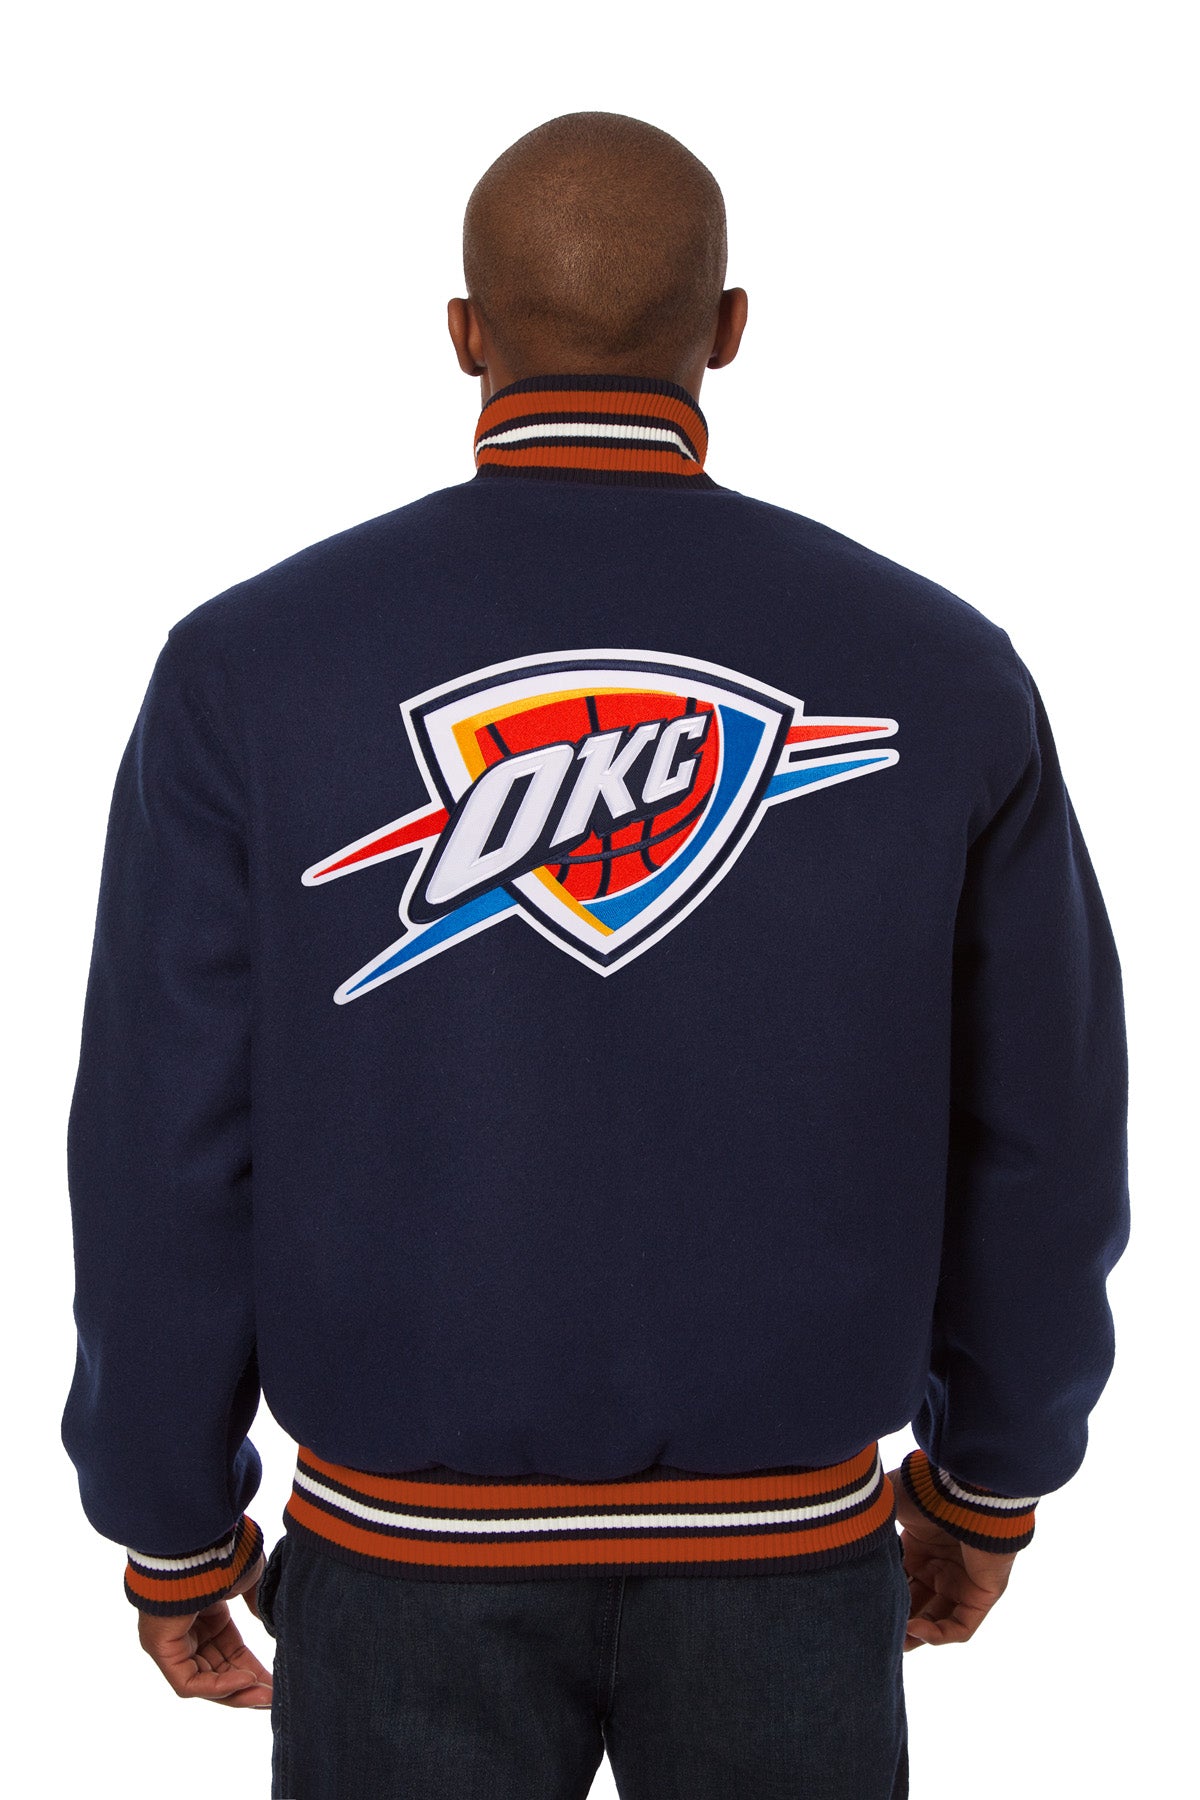 Oklahoma City Thunder Embroidered Wool Jacket